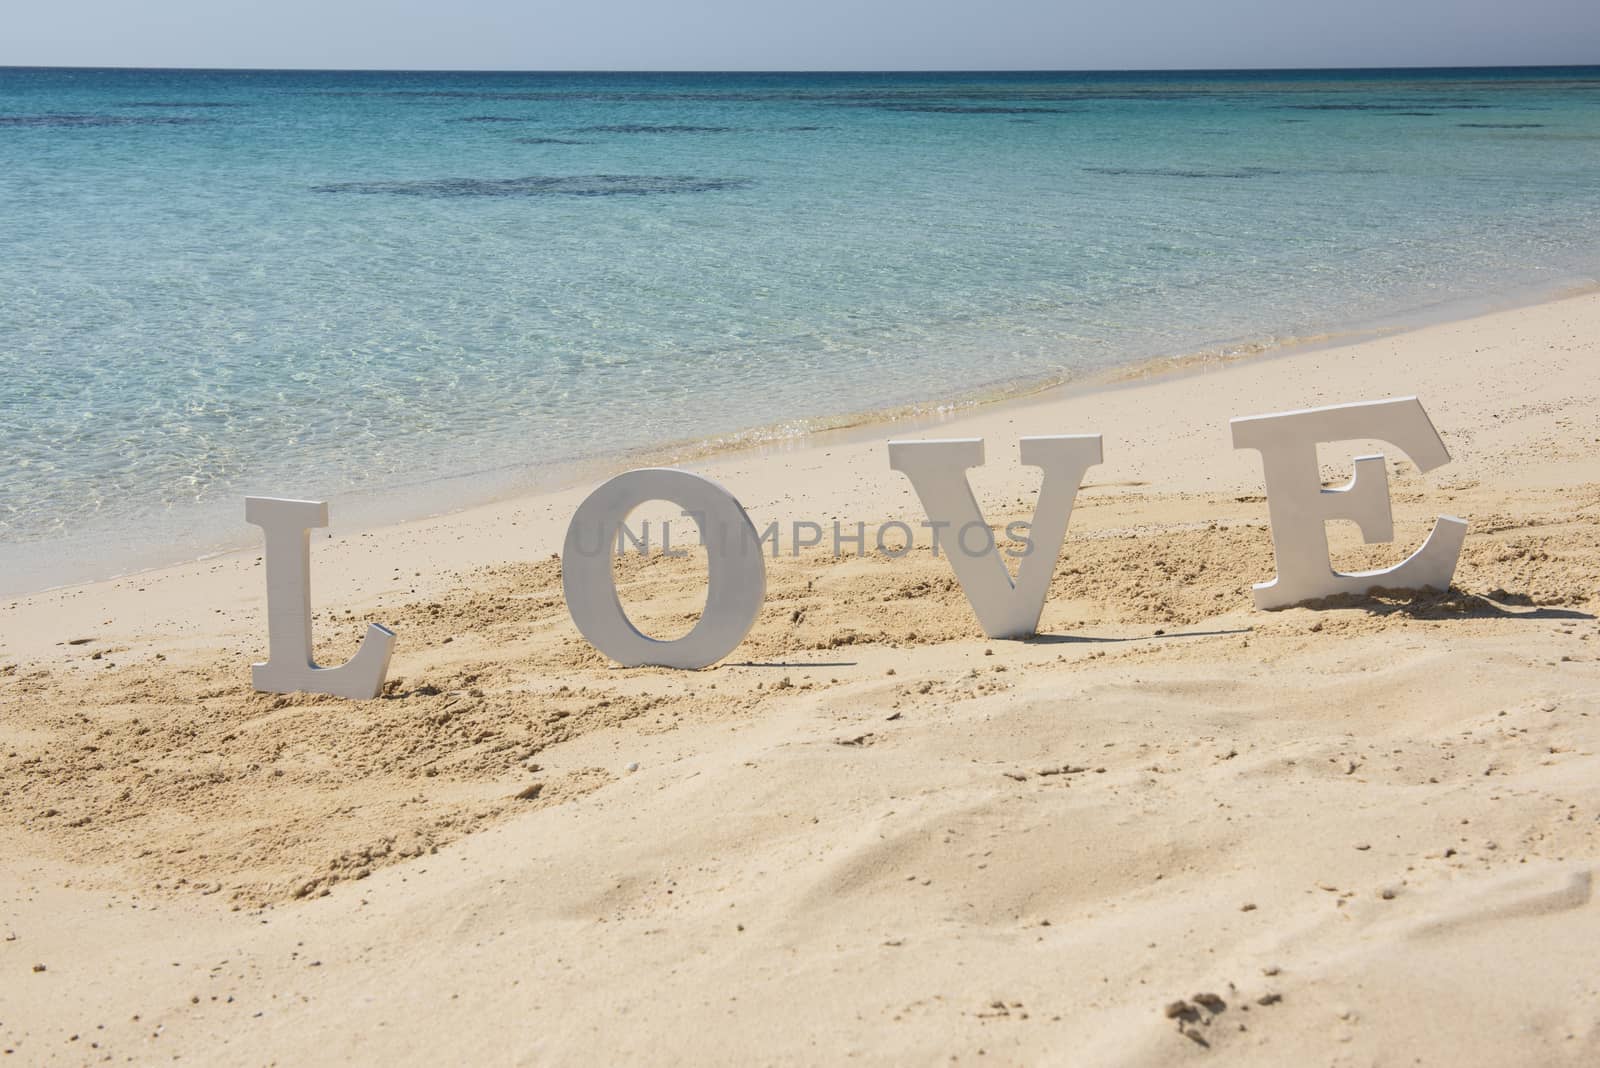 Romantic sign on a tropical beach paradise by paulvinten